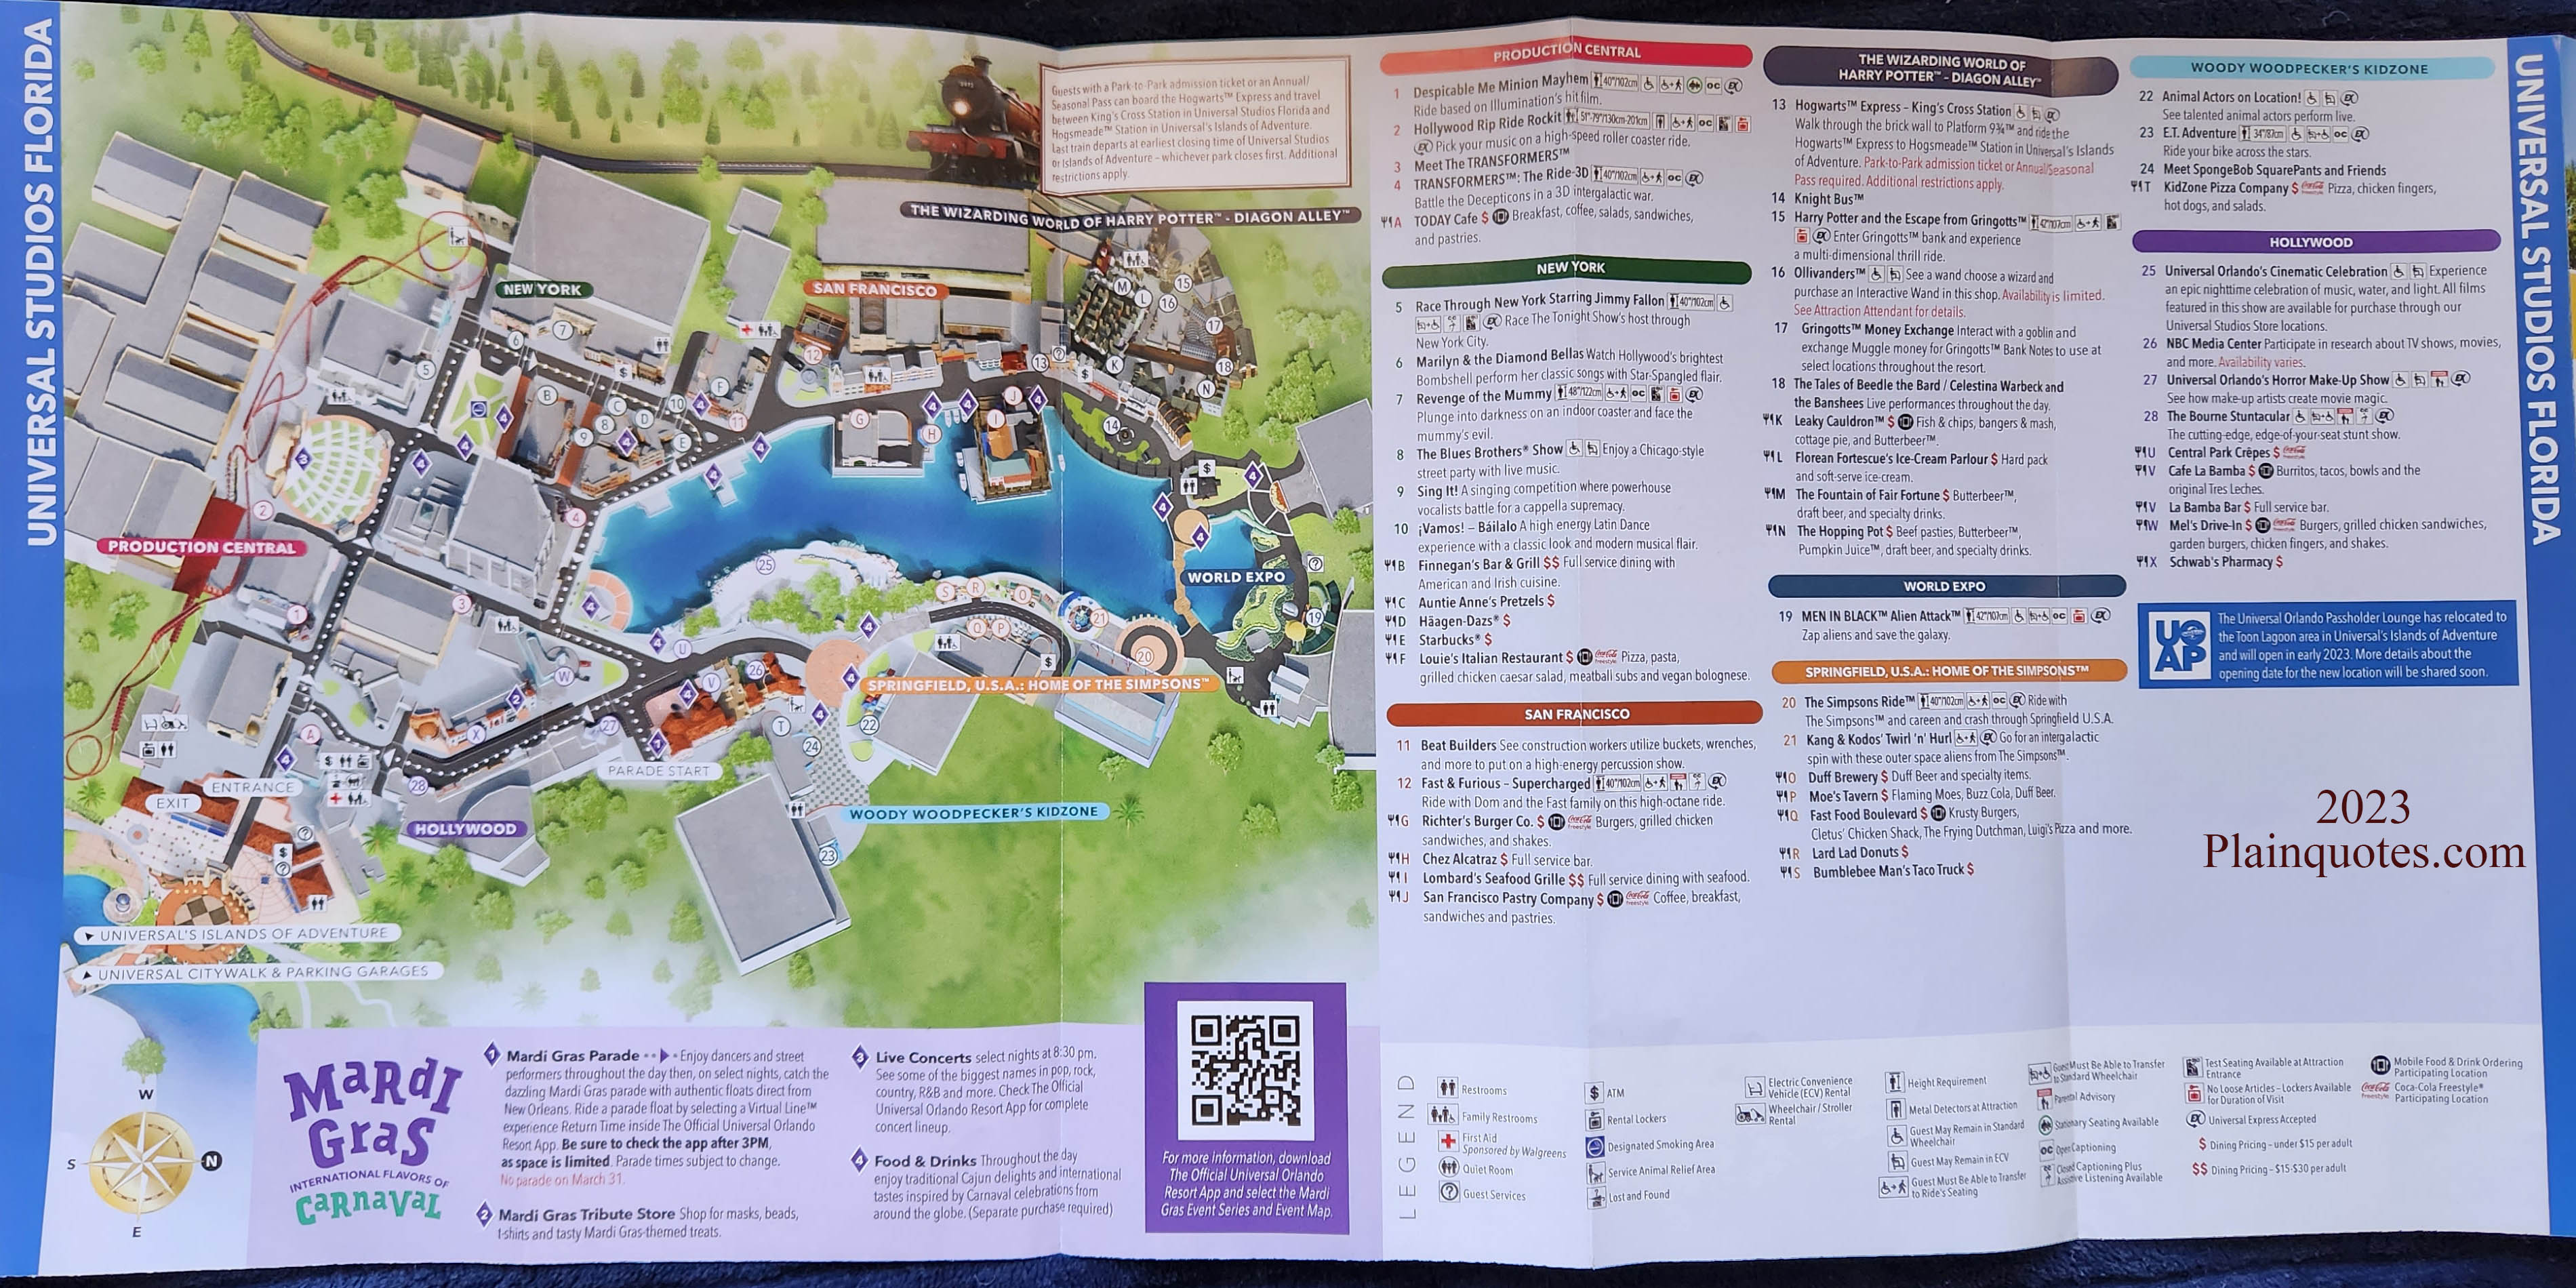 Universal Studios Islands of Adventure : park maps, informations, photos,  videos - Park & Coaster